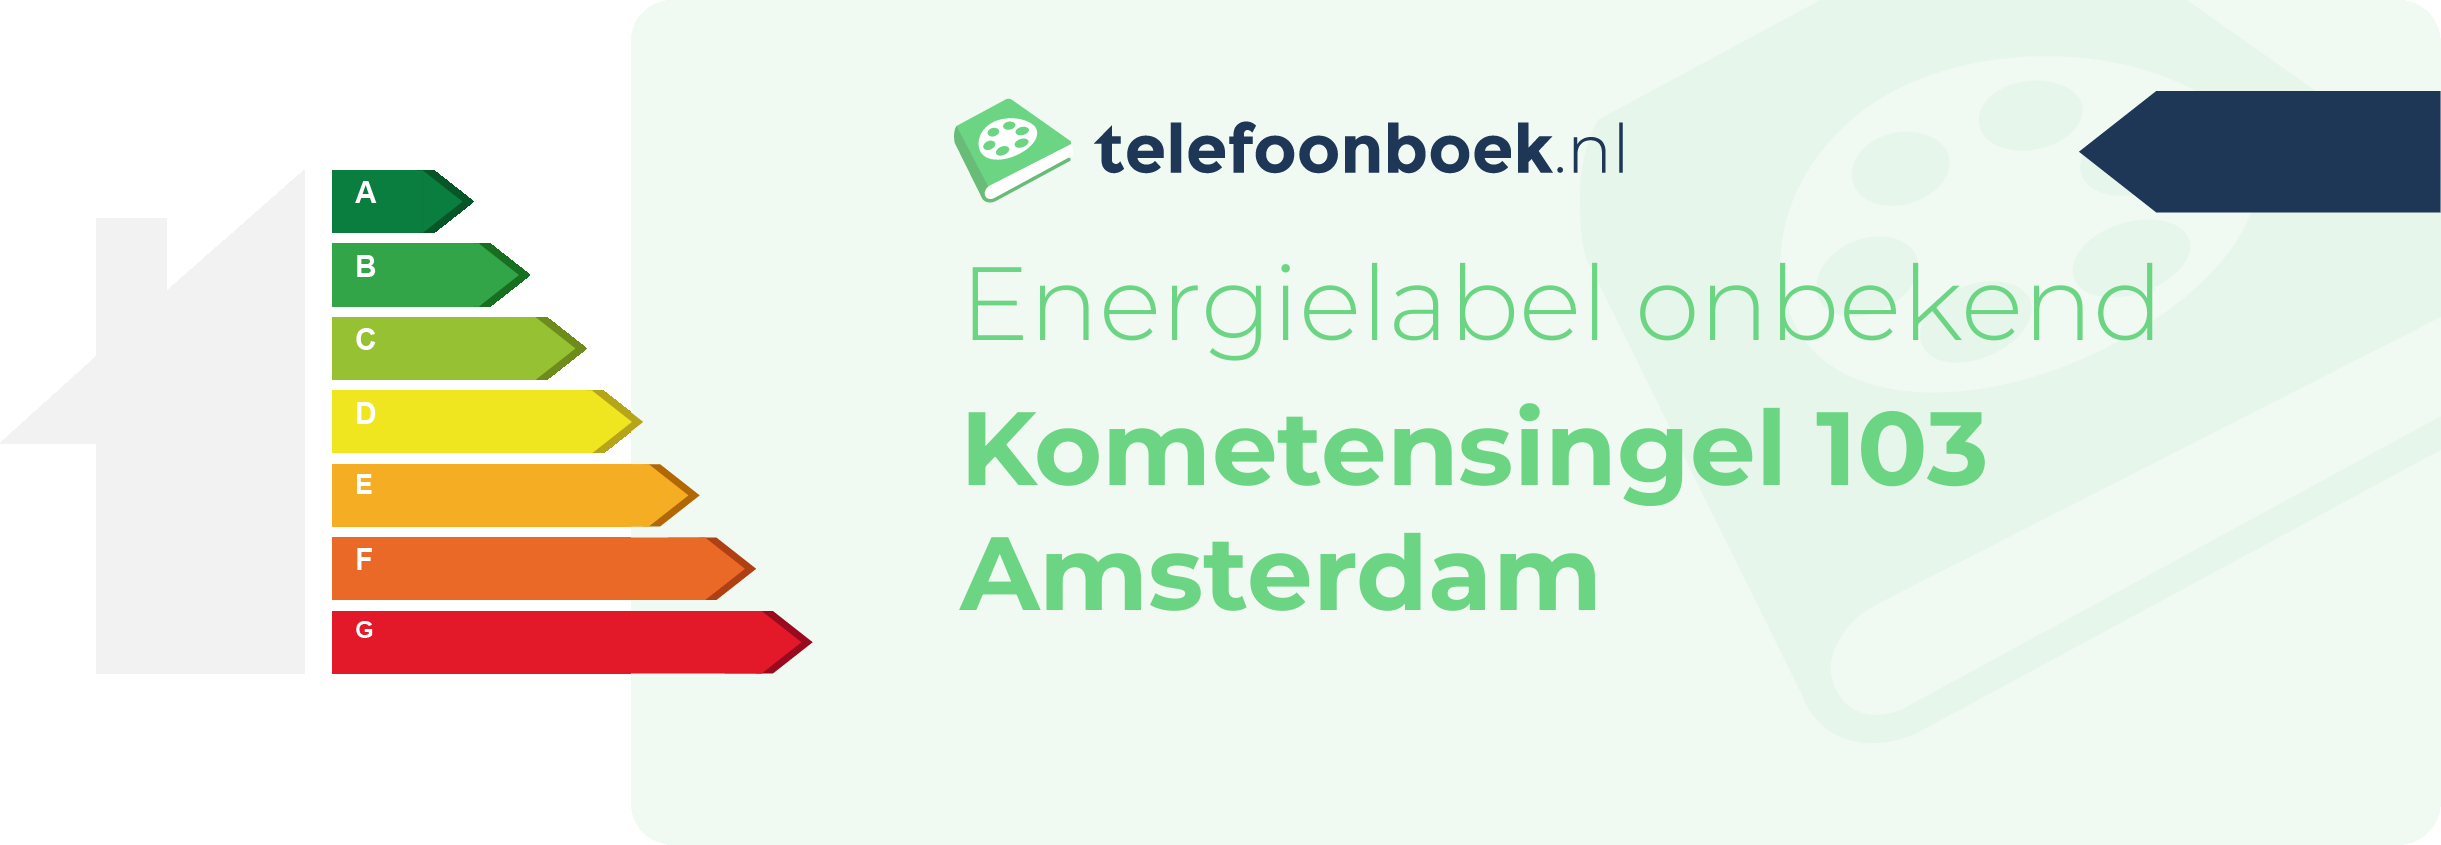 Energielabel Kometensingel 103 Amsterdam